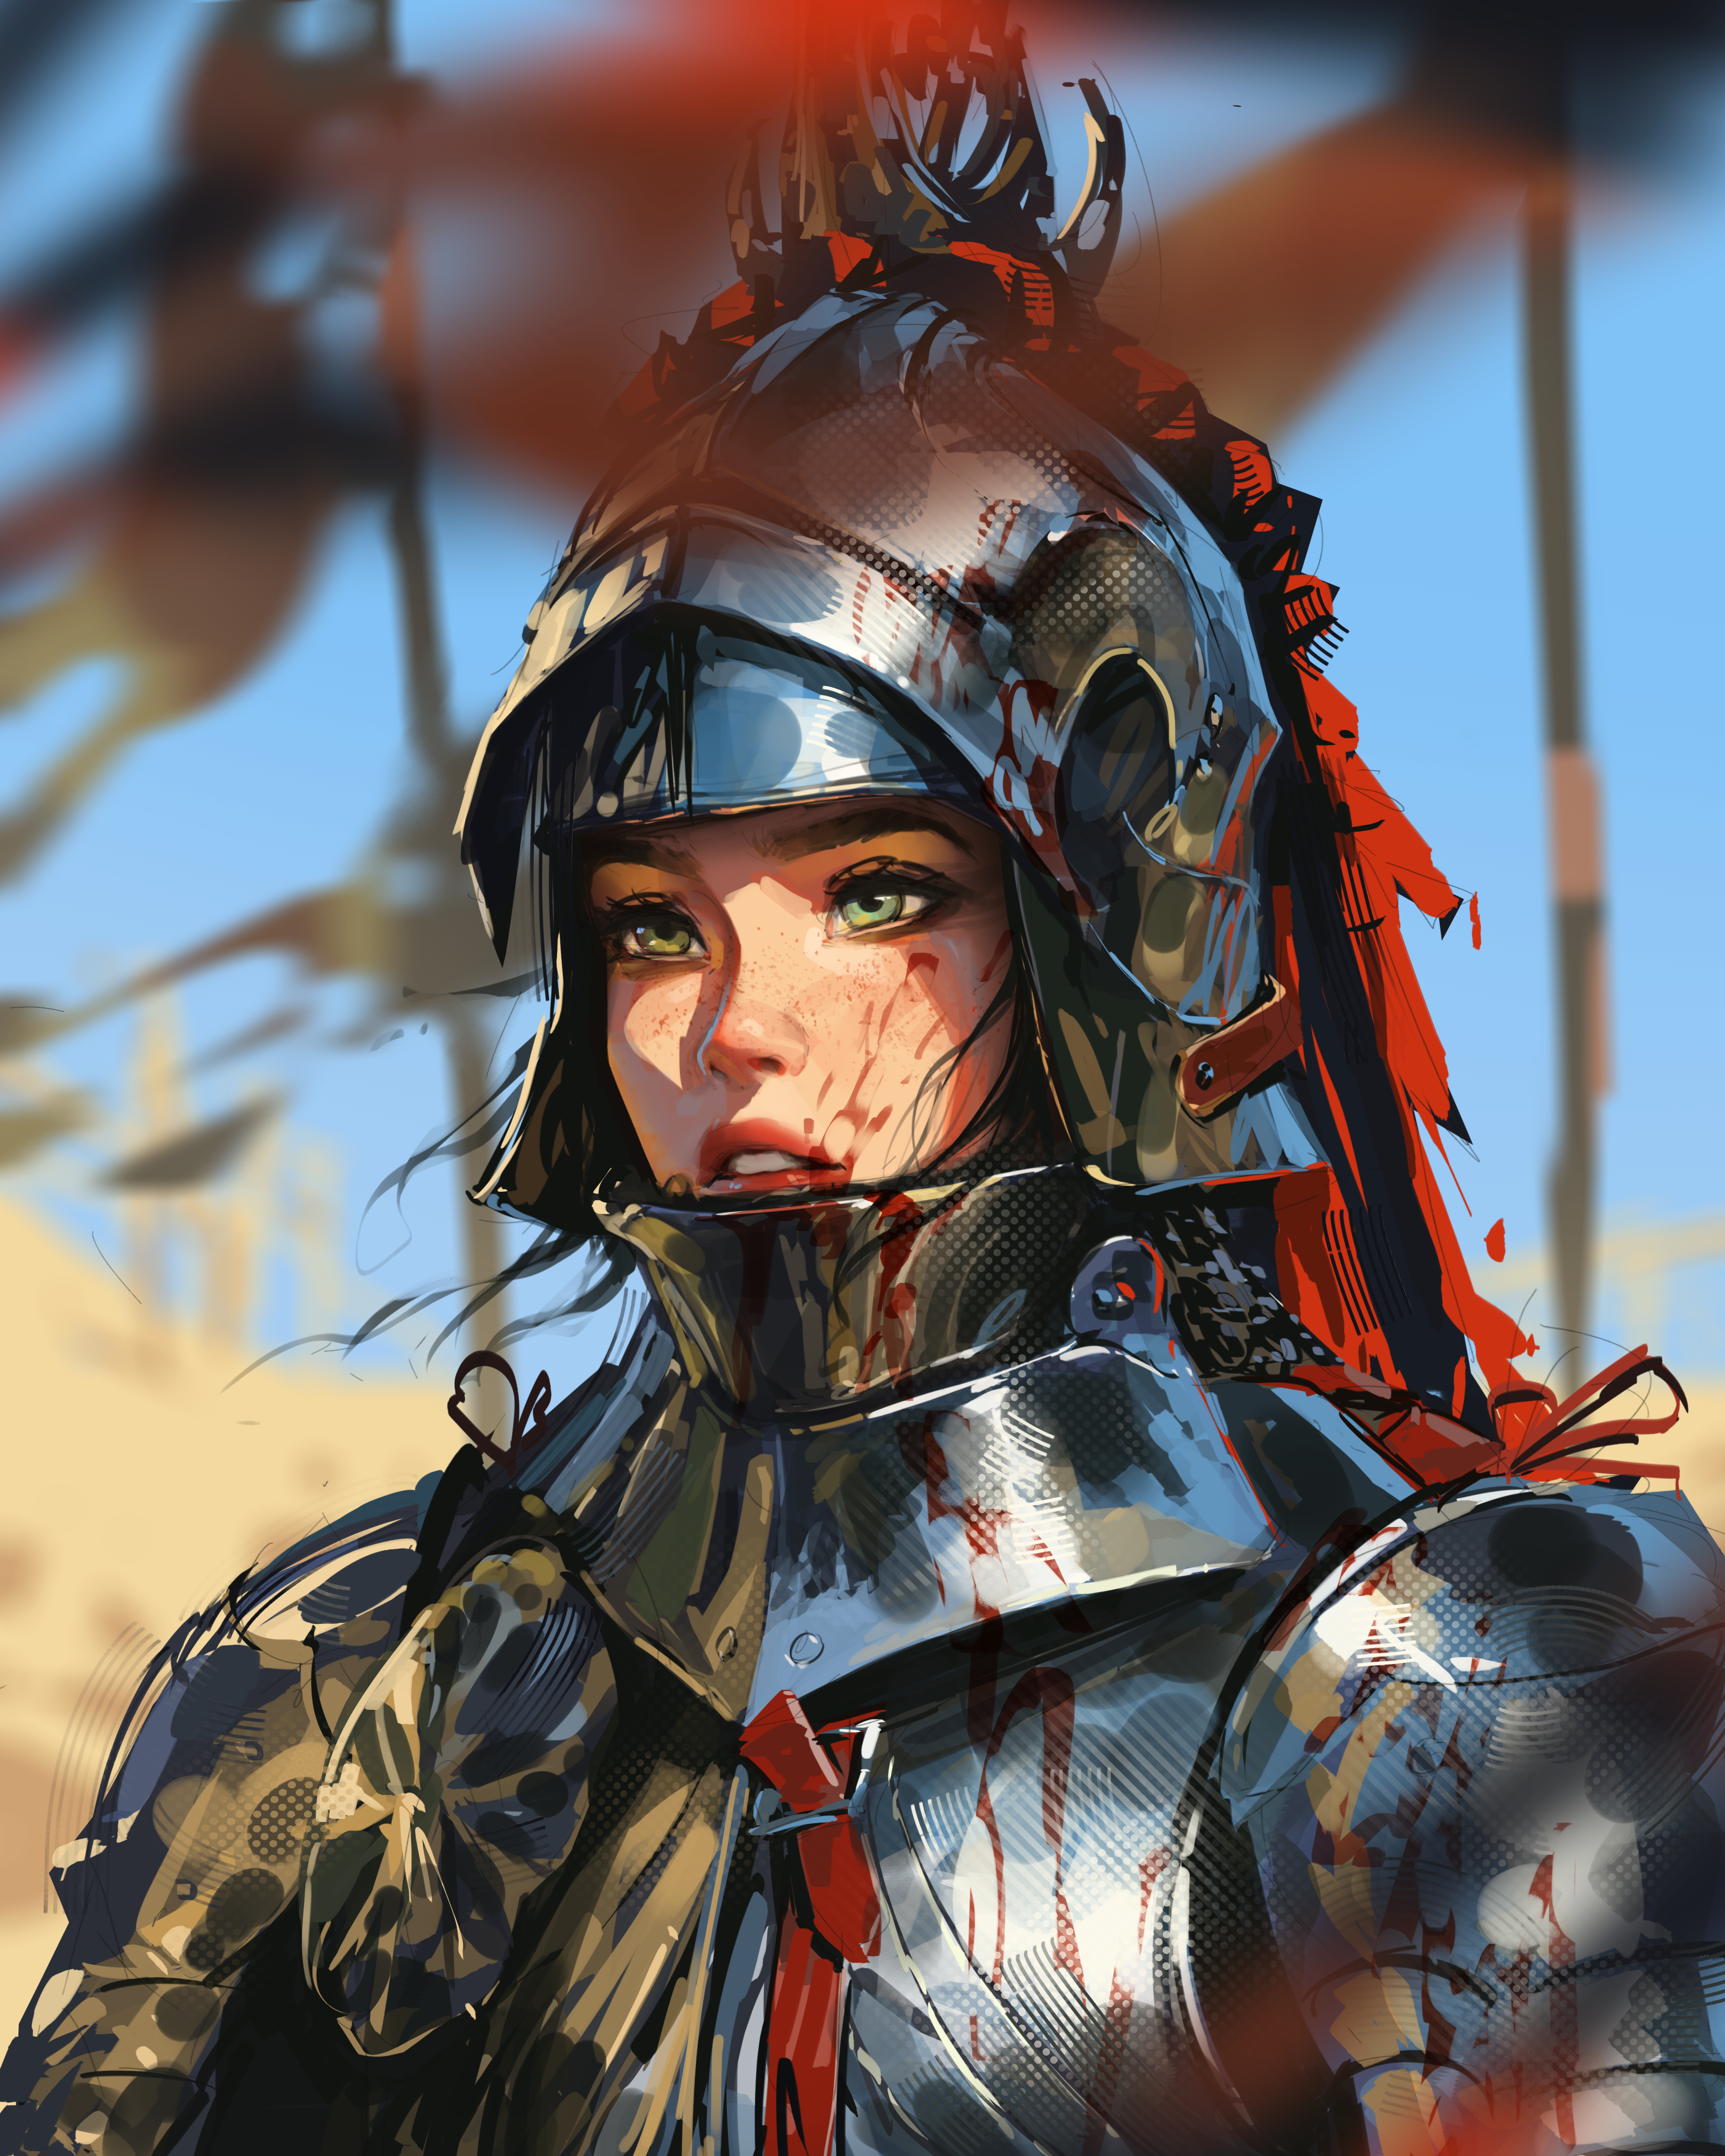 Sam Yang Digital Art Artwork Illustration Women Knight Armor Portrait Red Lipstick Freckles Medieval 4320x5400